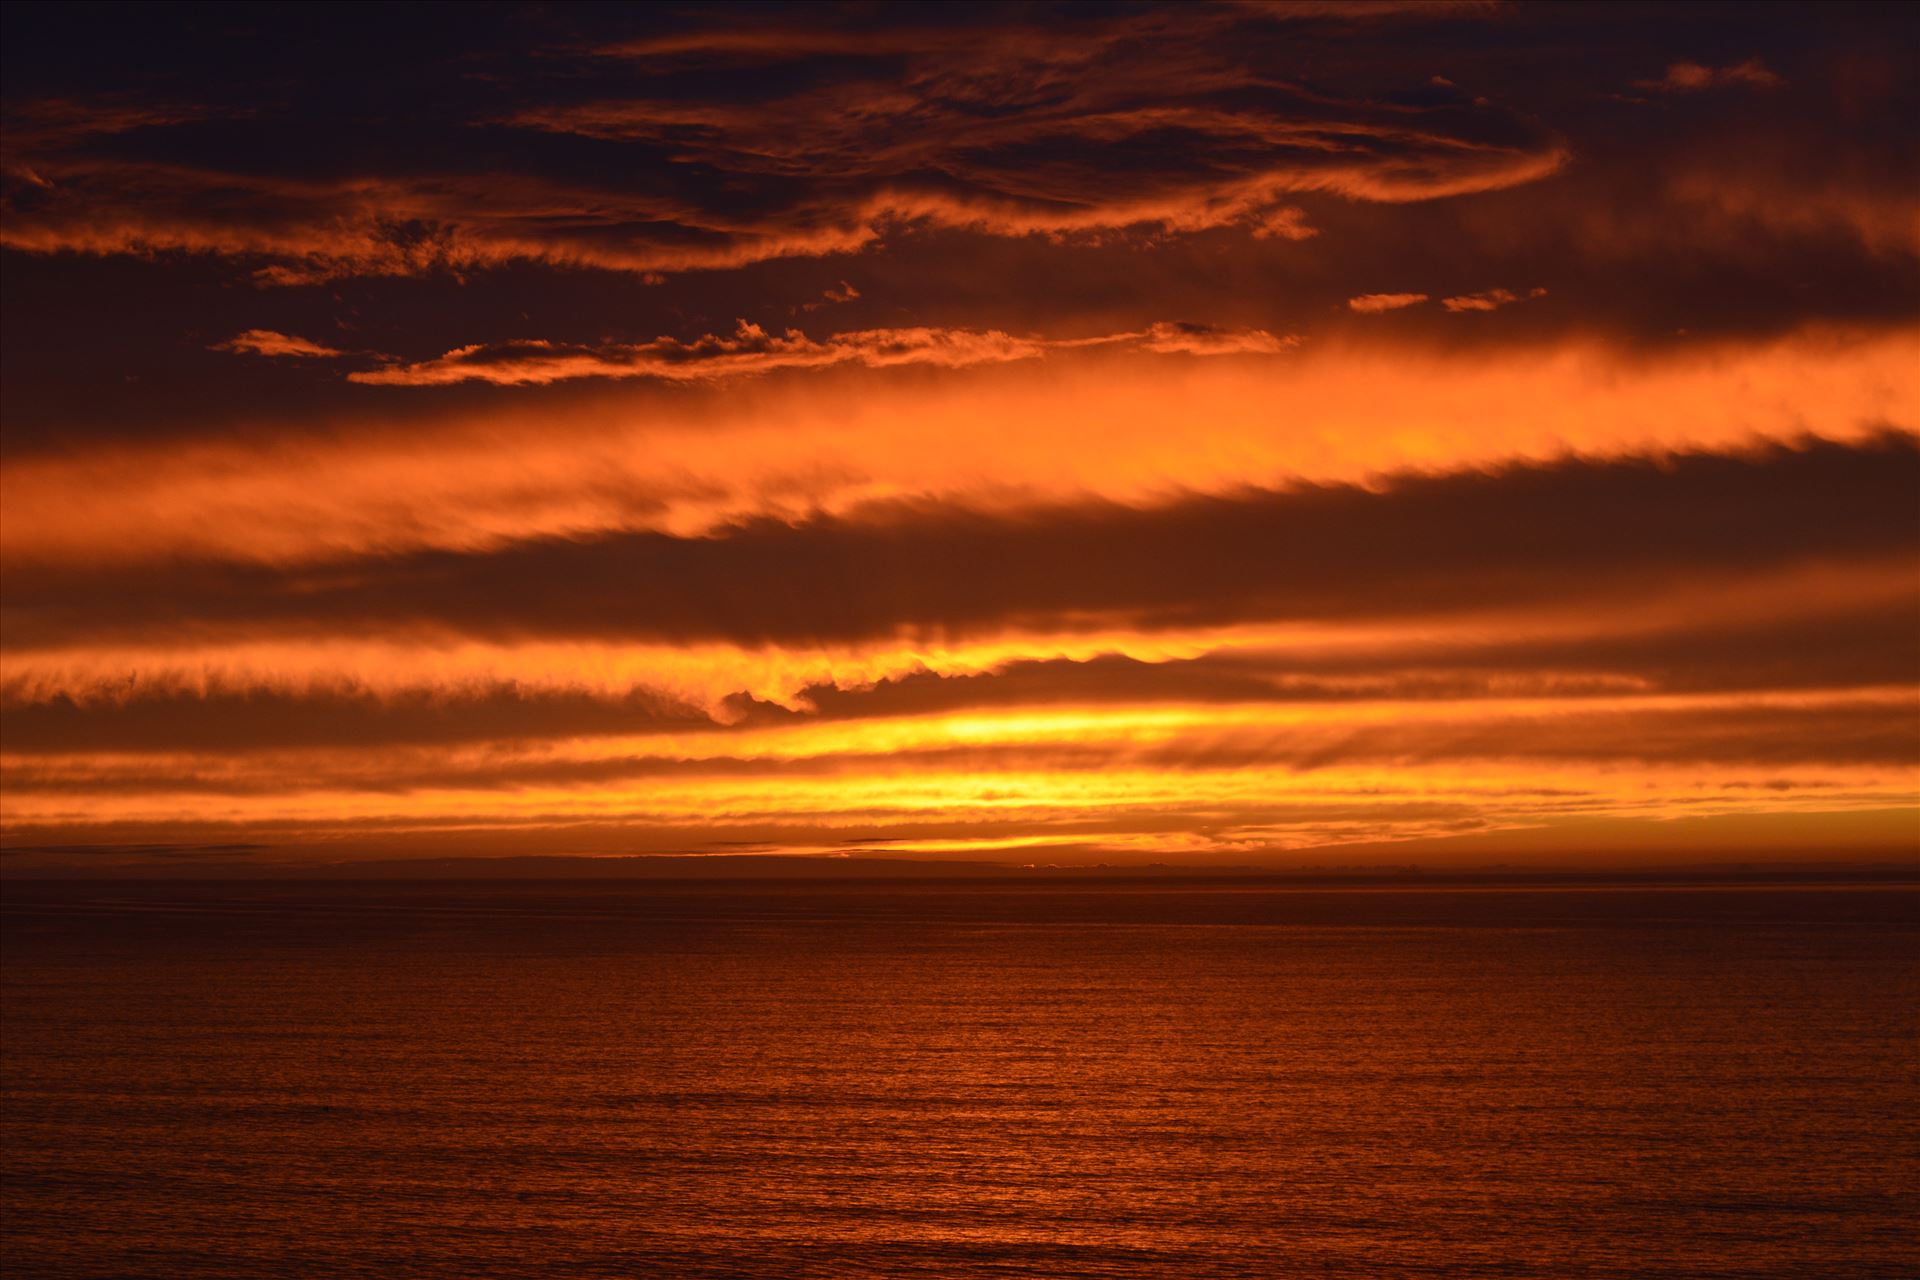 Biblical Sunset at Esplanade - 8x12 print
matte
white frame 18x24 by Bridget Oates Photography